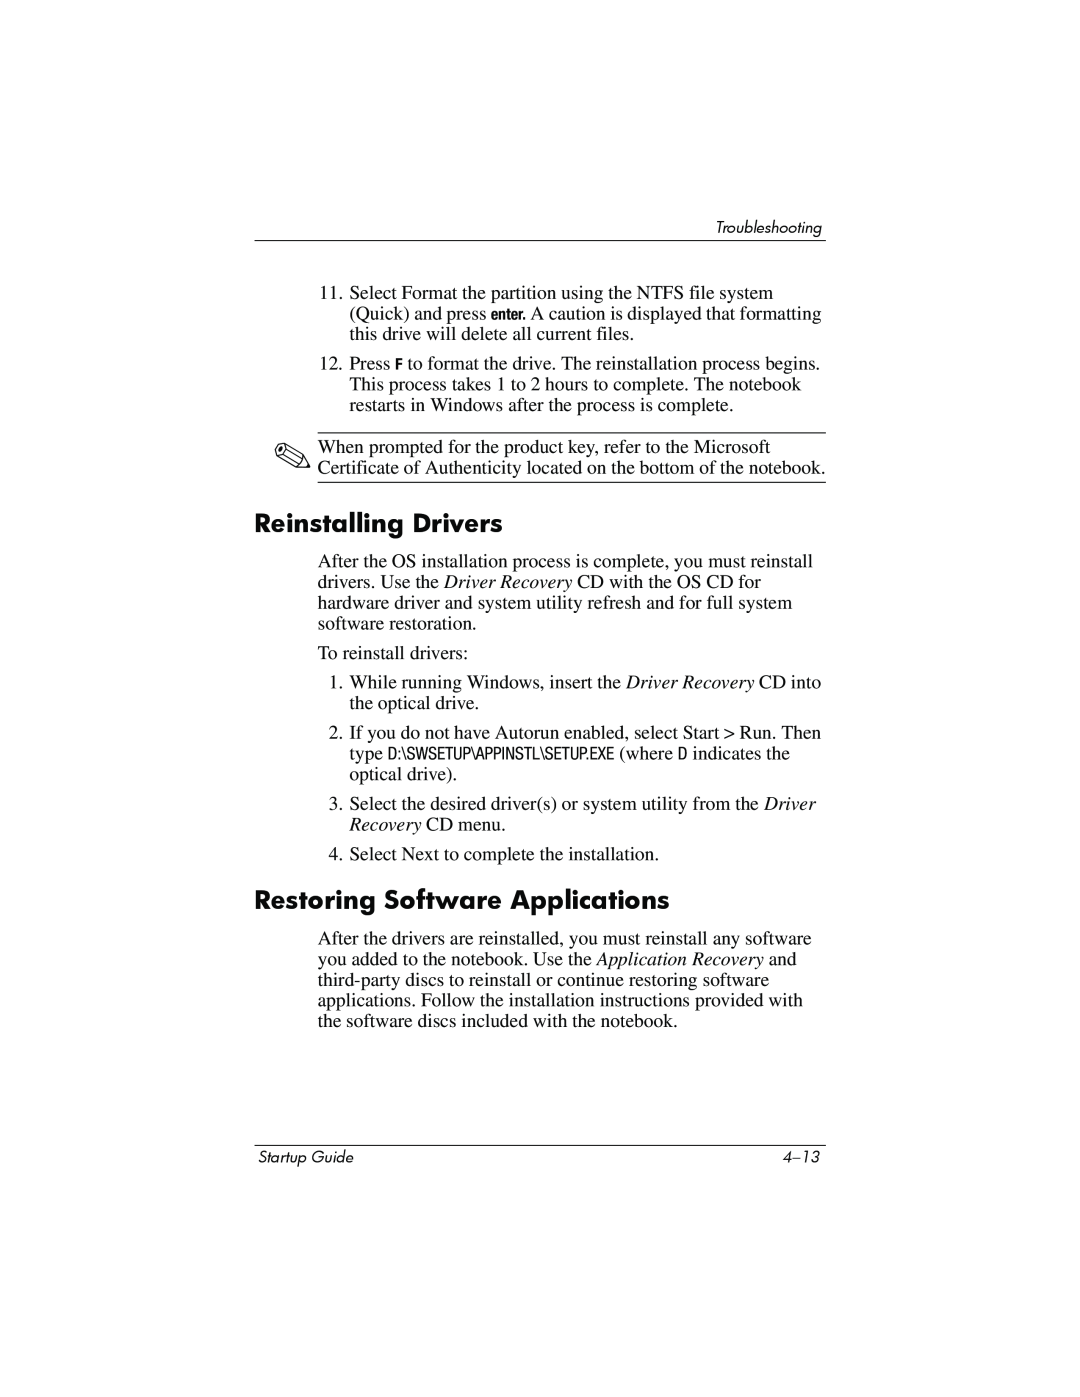 Compaq Personal Computer manual Reinstalling Drivers, Restoring Software Applications 